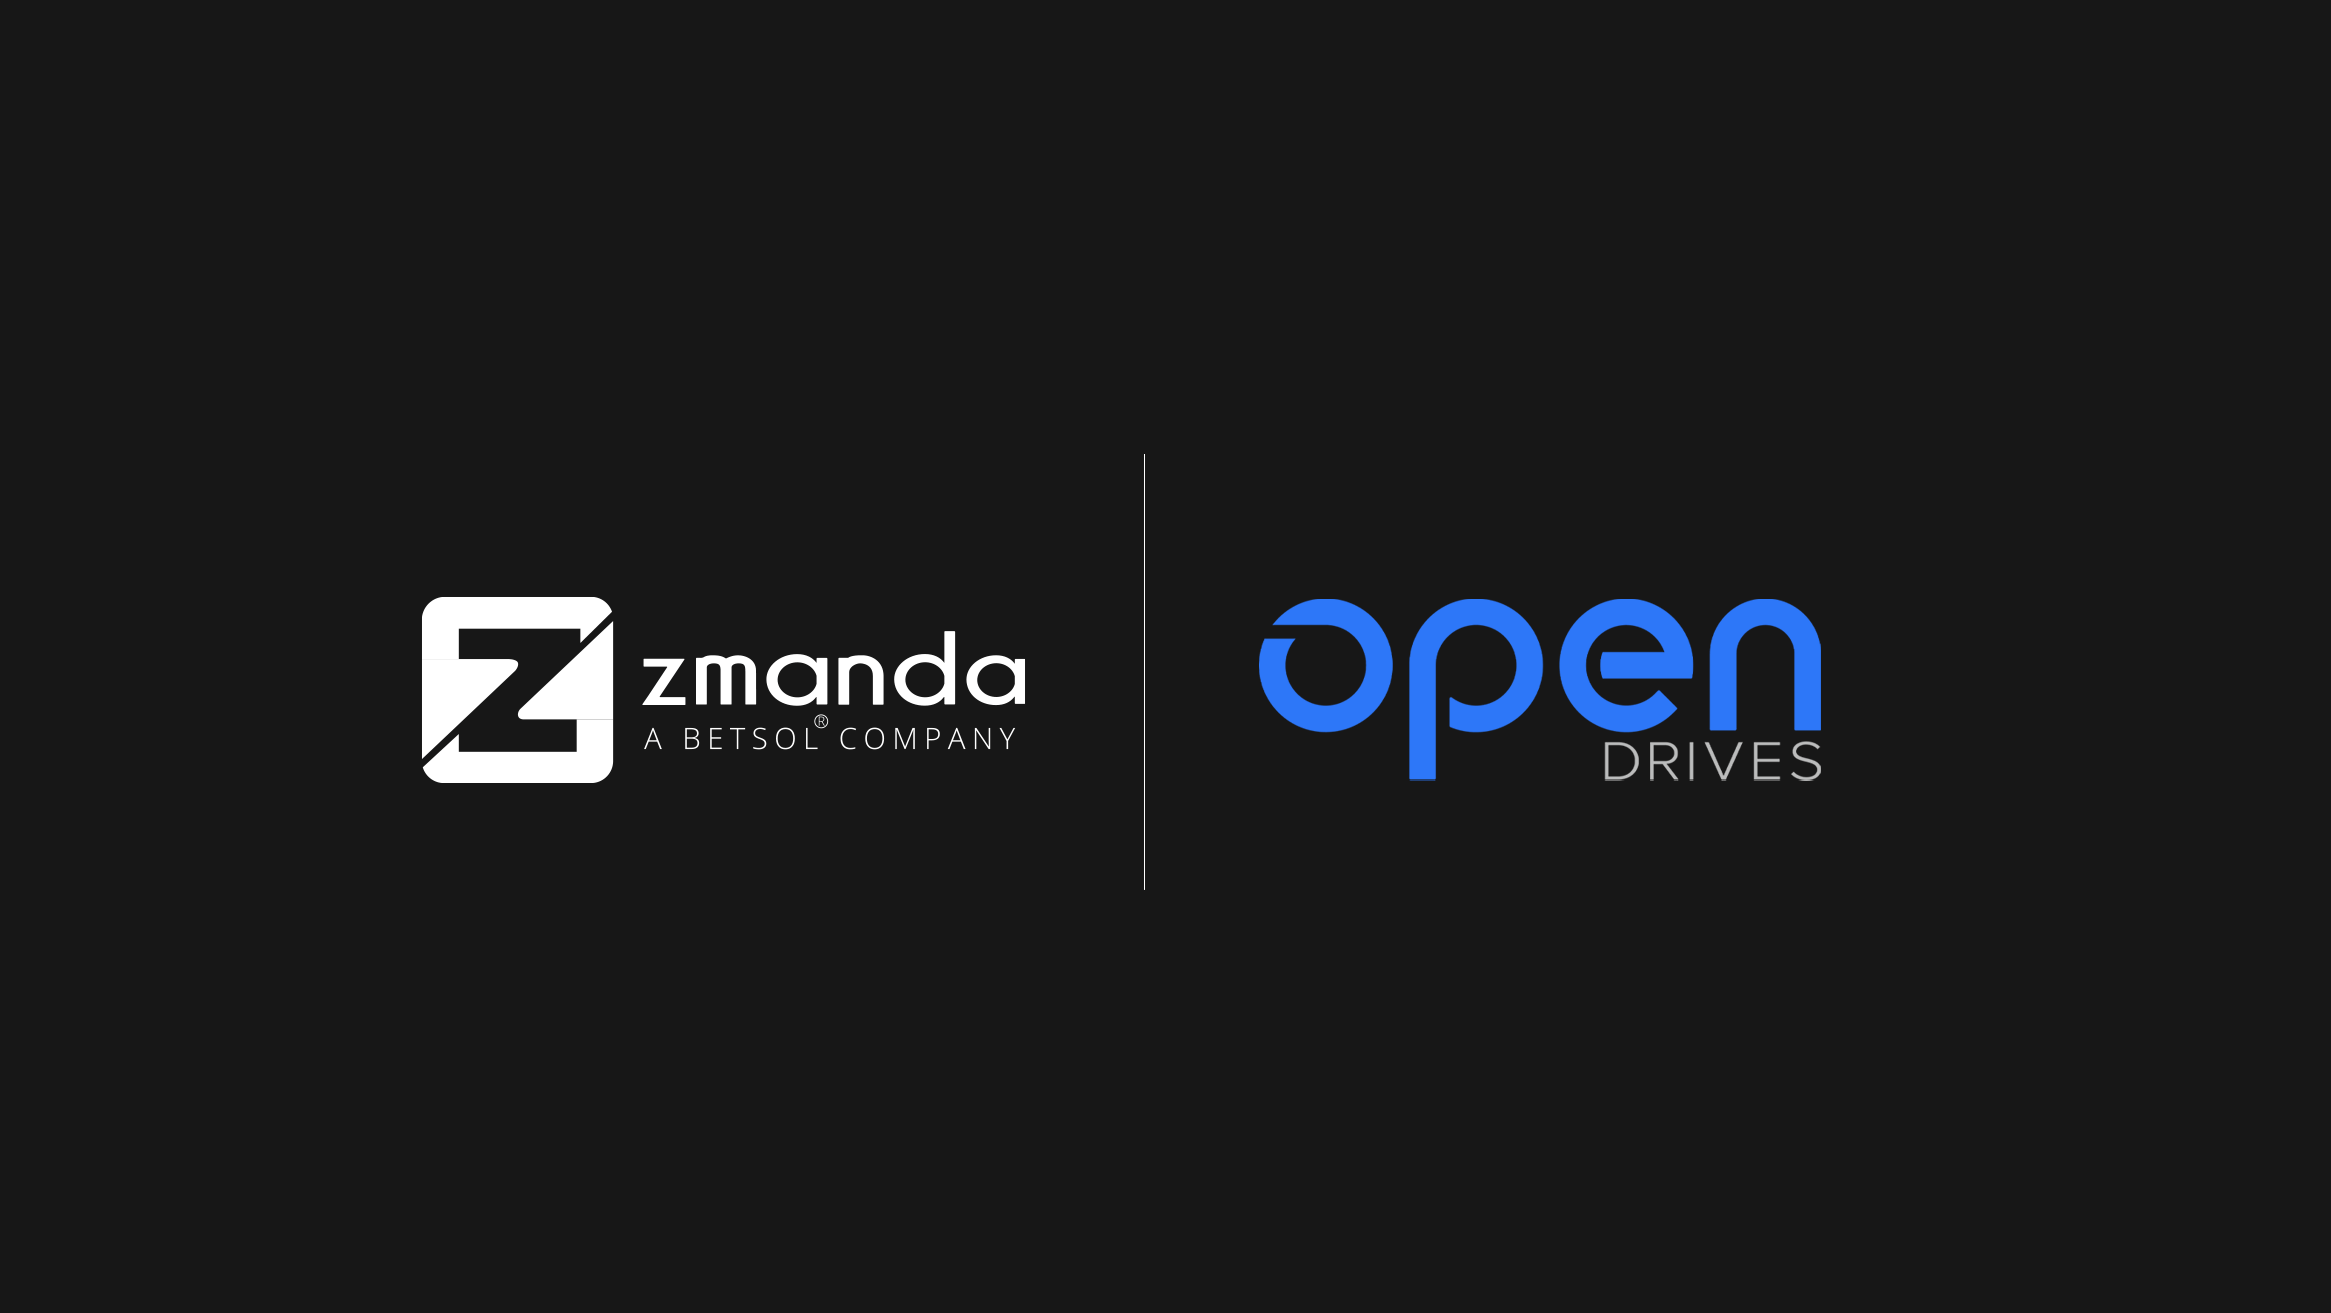 OpenDrives Zmanda-partnerschap